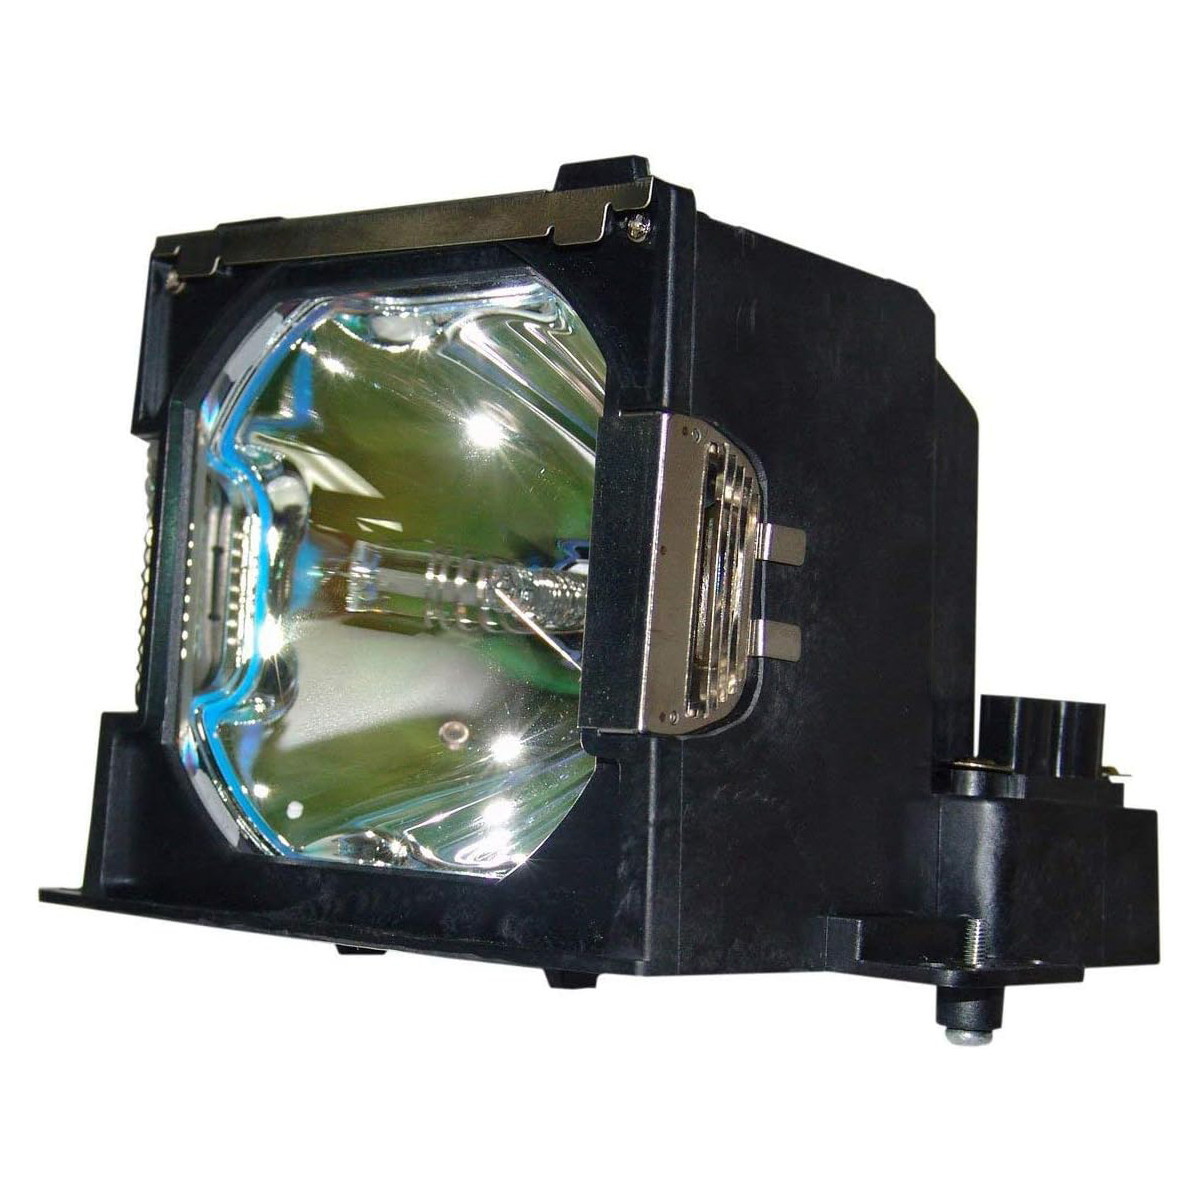 Replacement Projector lamp POA-LMP101 For Sanyo ML -5500 PLC-XP57 PLC-XP57L